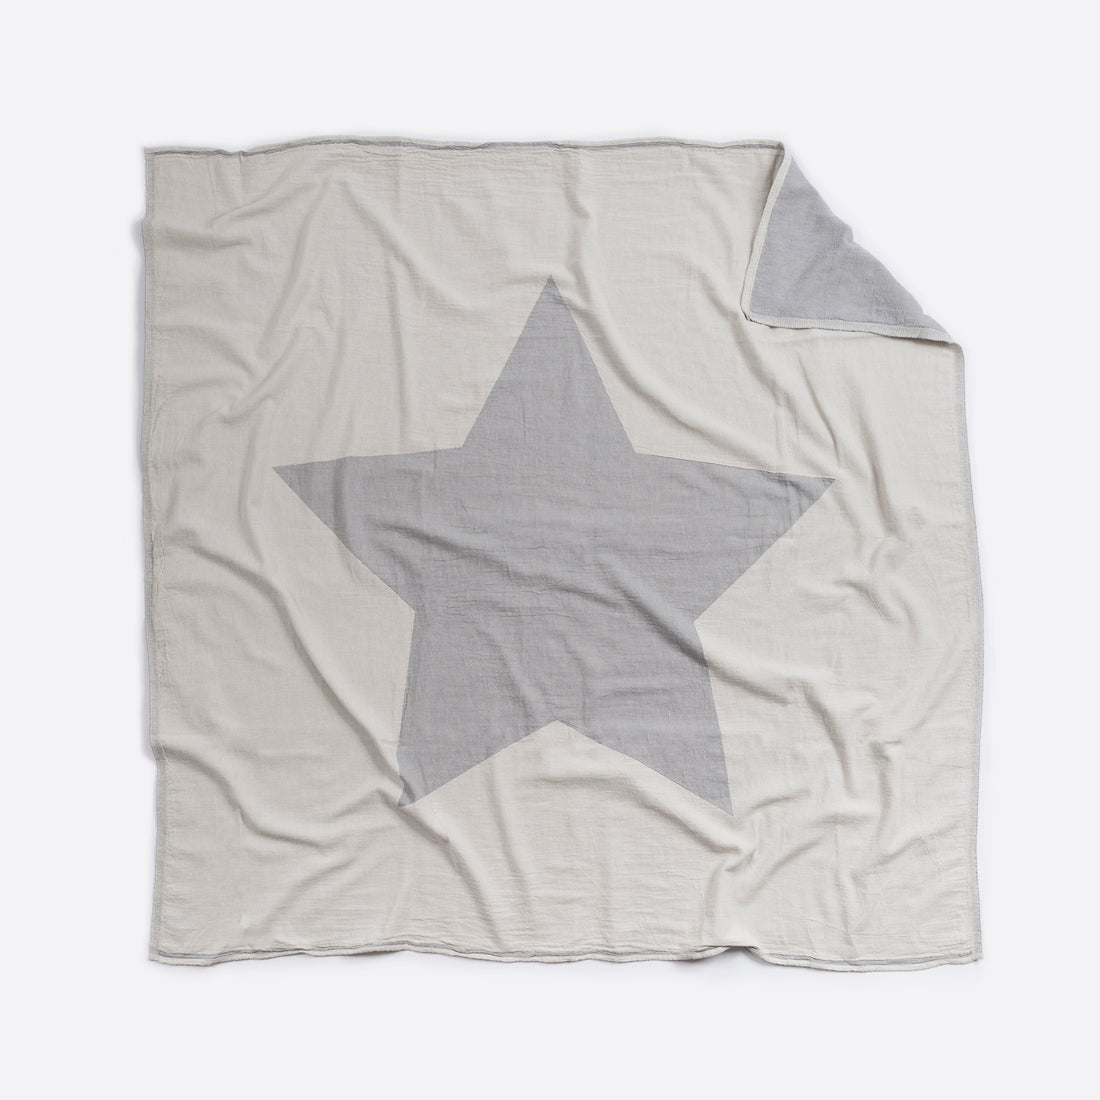 Grey North Star Baby Blanket